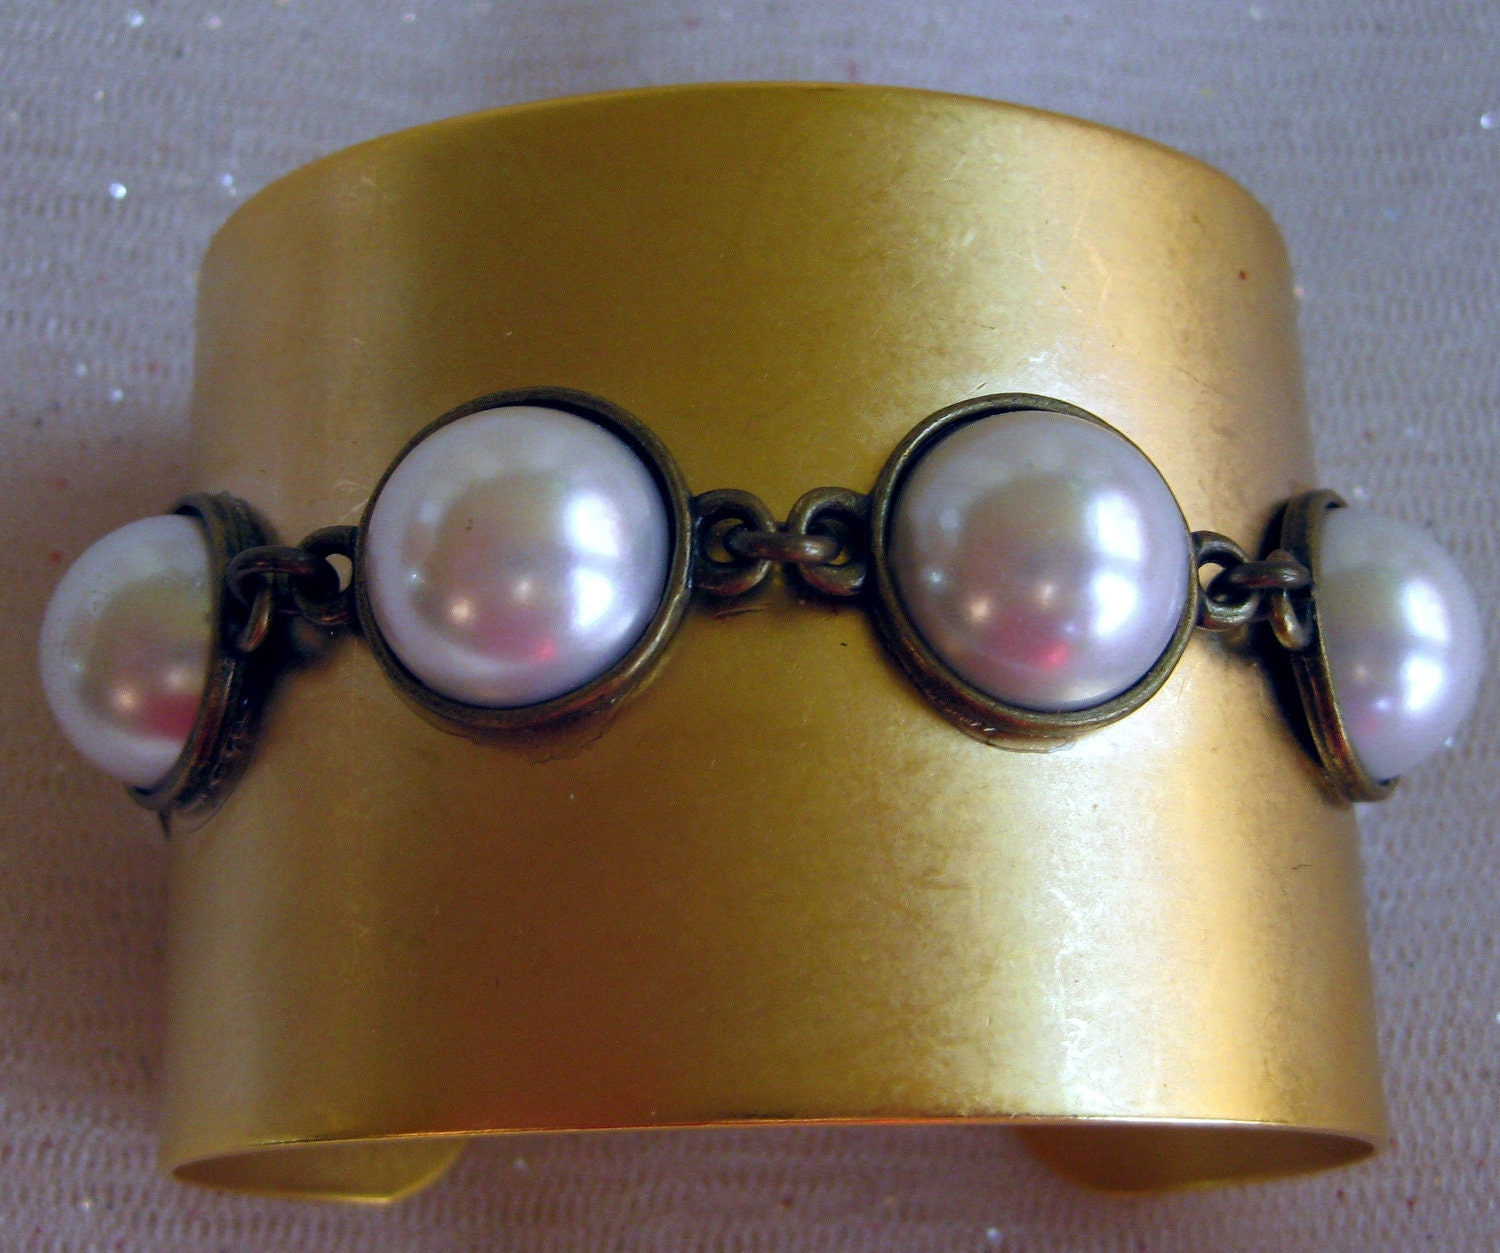 Cuff Bracelets, Sterling Silver Cuff Bracelets, Leather Bracelets, Gold Cuff Bracelet  "PearlZ"